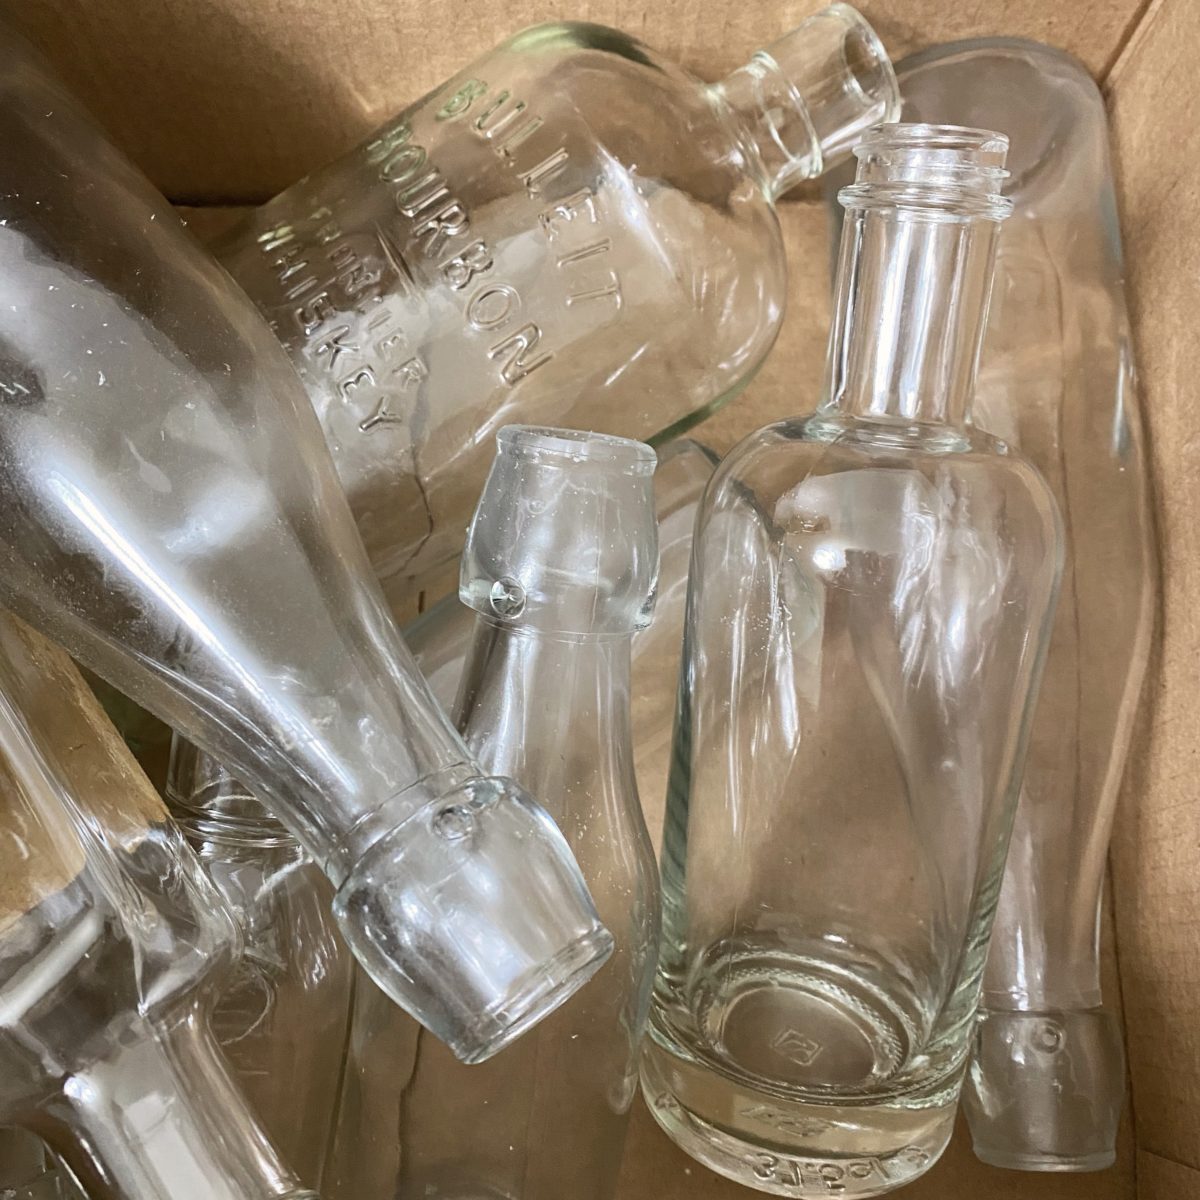 http://caligirlinasouthernworld.com/wp-content/uploads/2022/01/DIY-Frosted-Glass-Bottles-Bottles.jpg